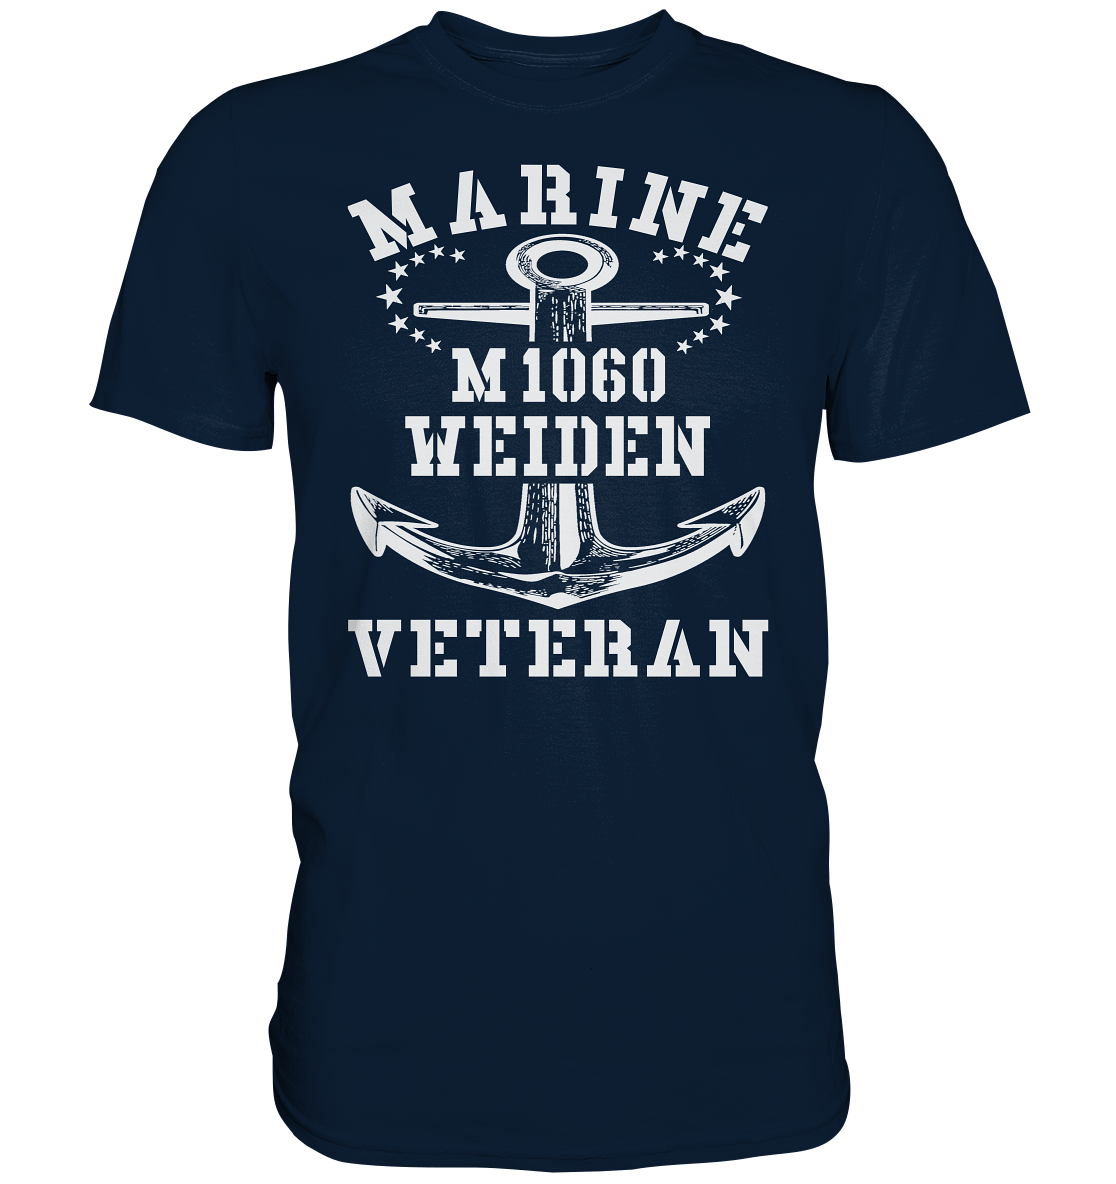 Mij.-Boot M1060 WEIDEN Marine Veteran - Premium Shirt